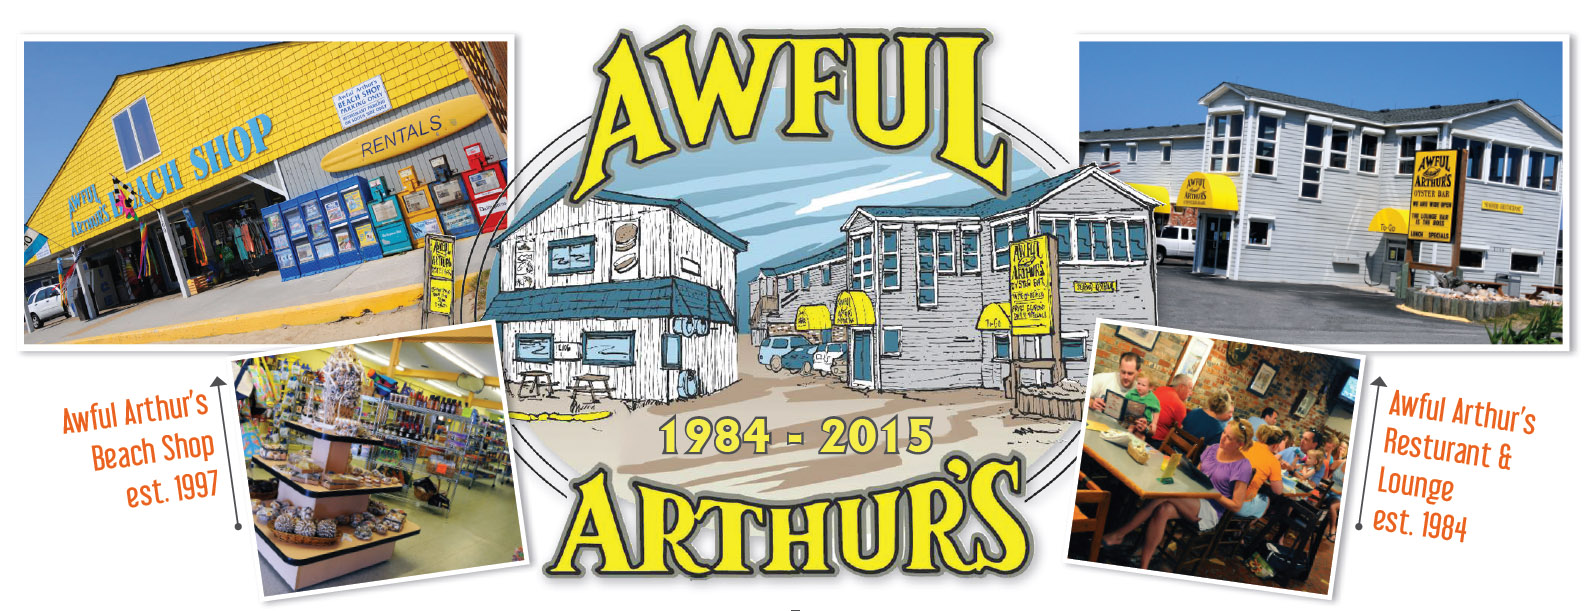 Awful Arthurs Logos